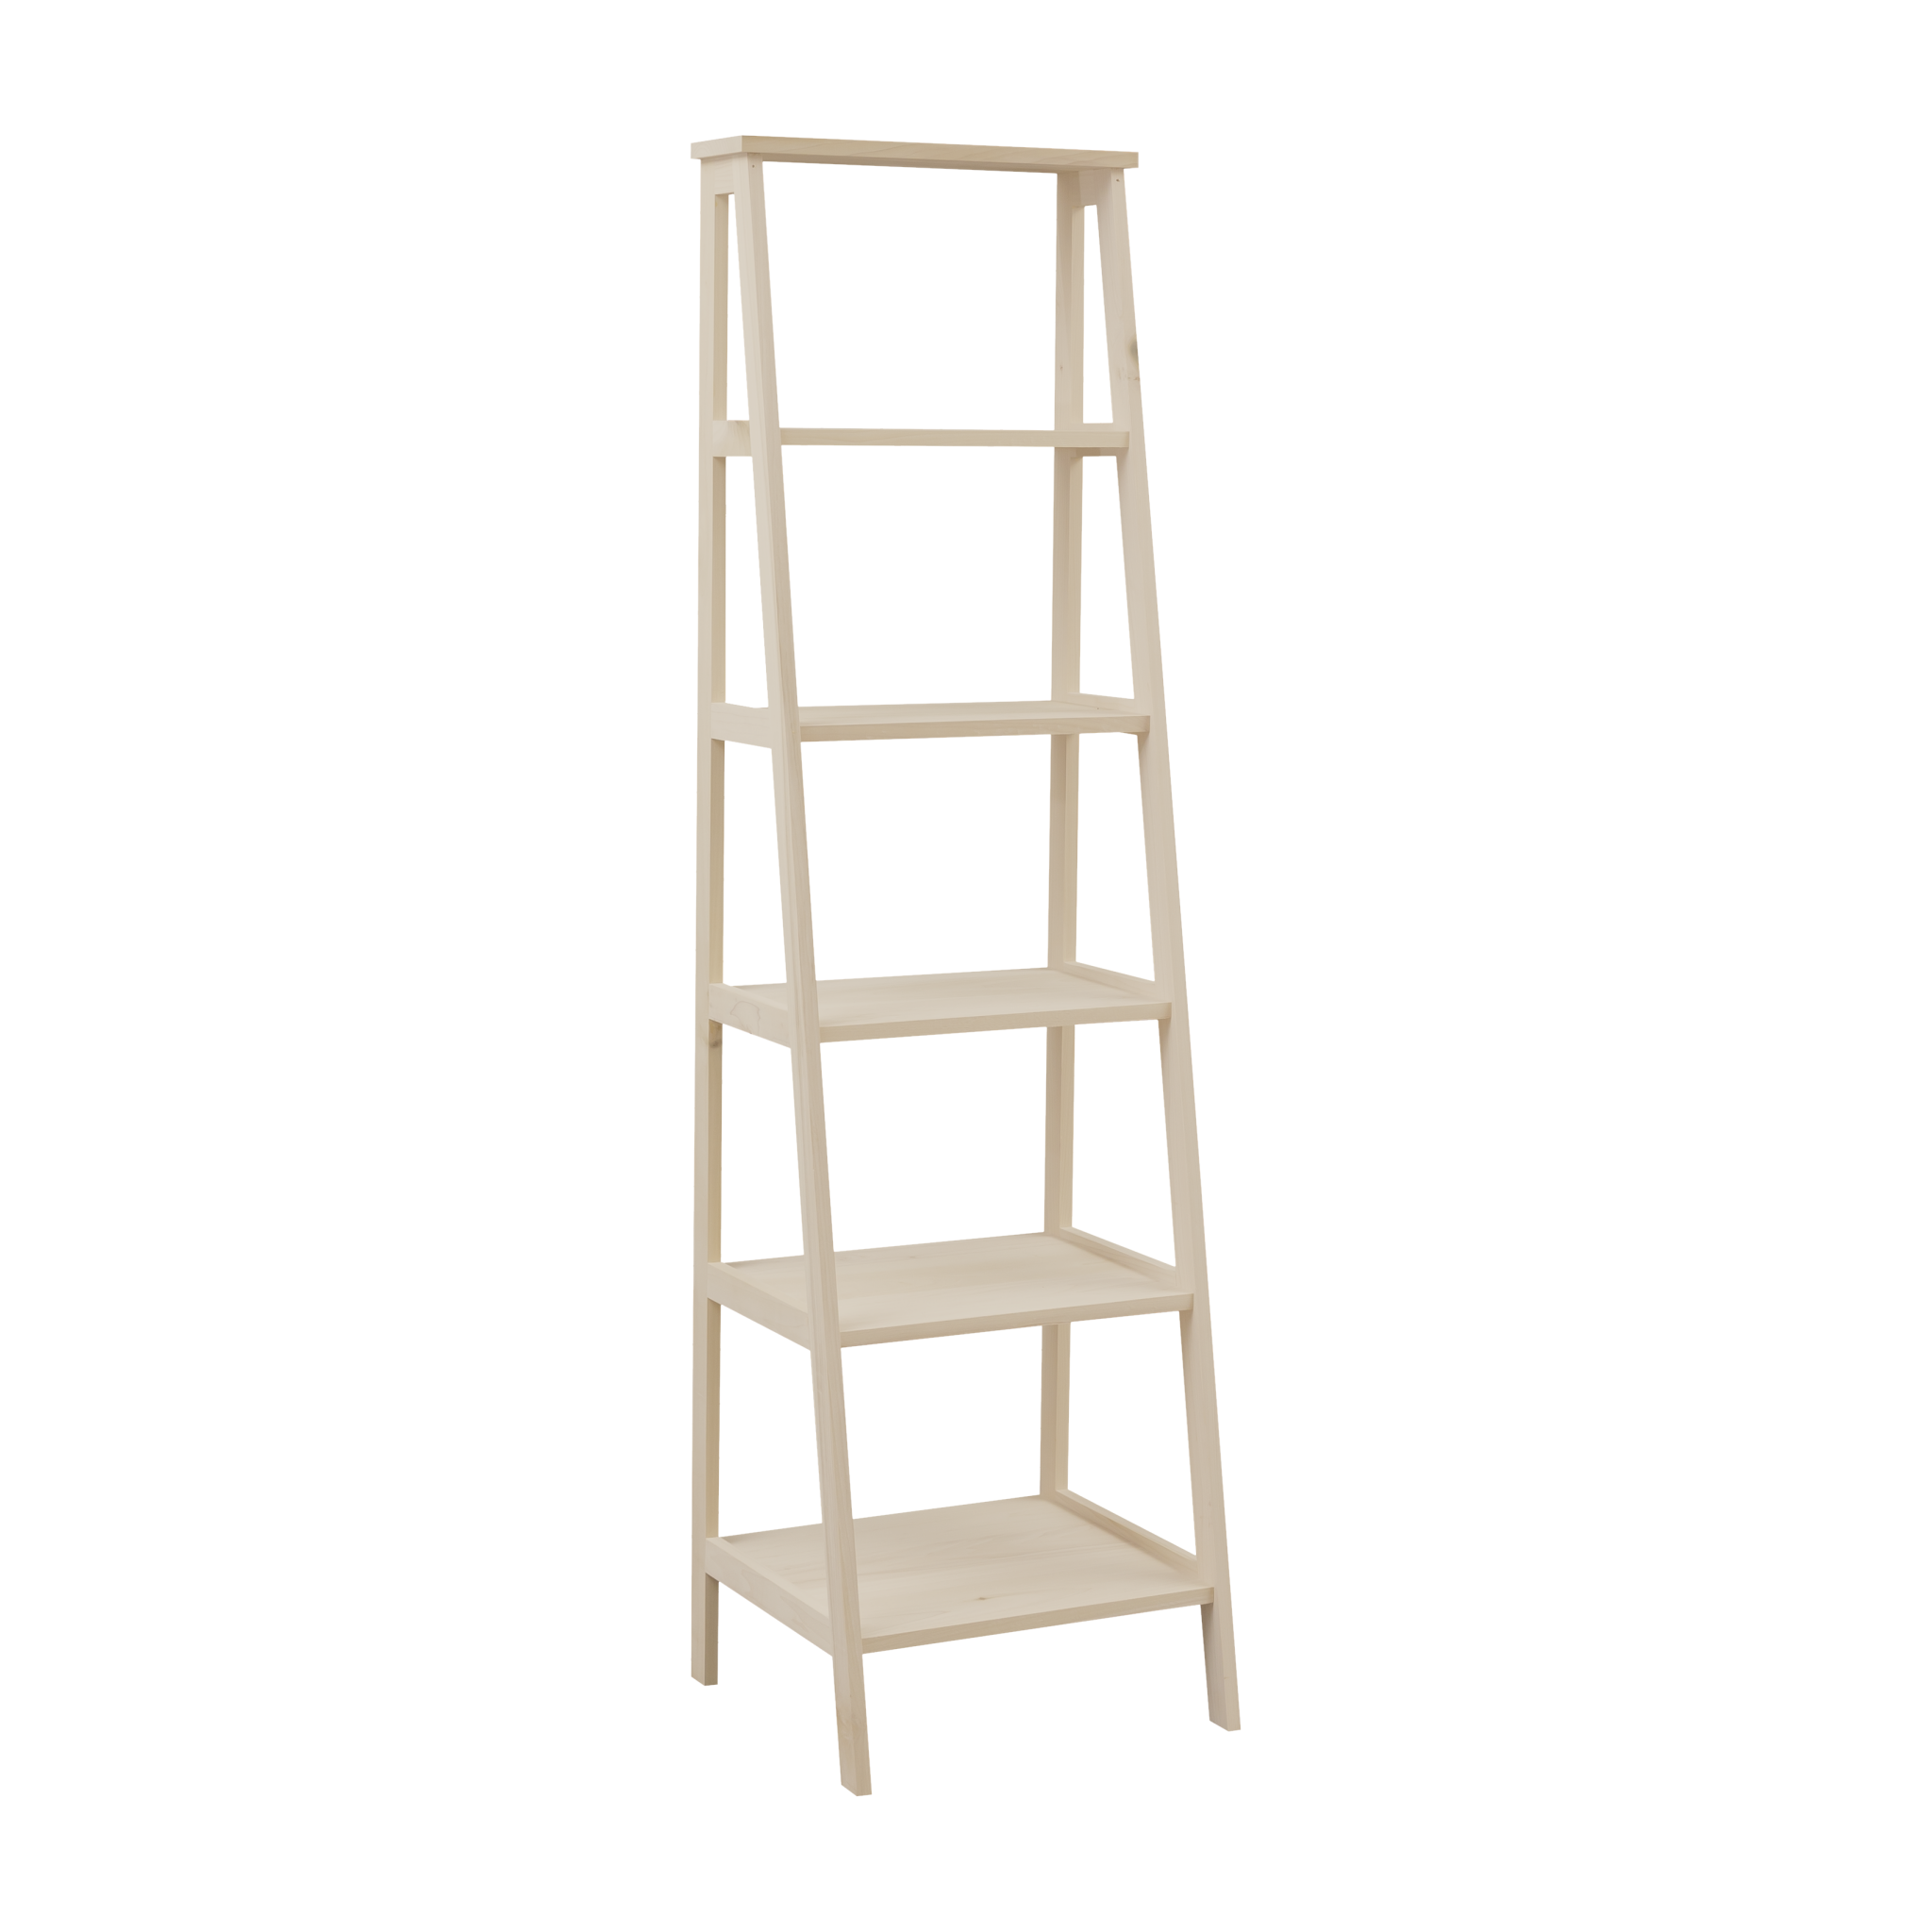 6' Ladder Shelf